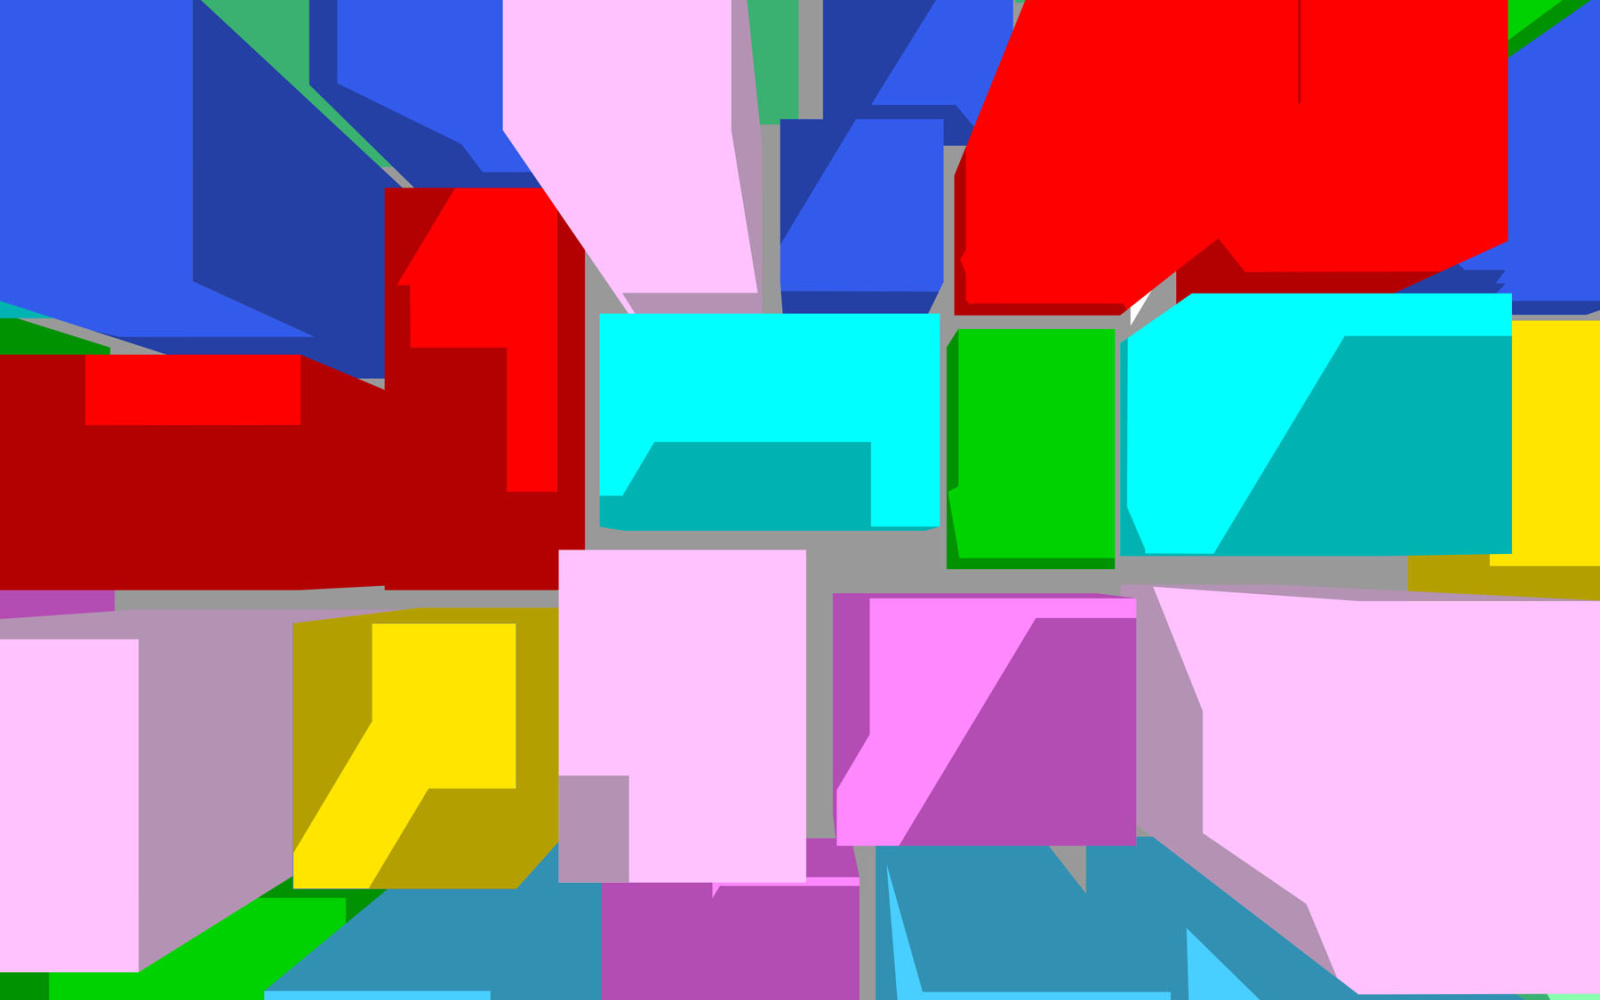 Different colored, 3D cubes.